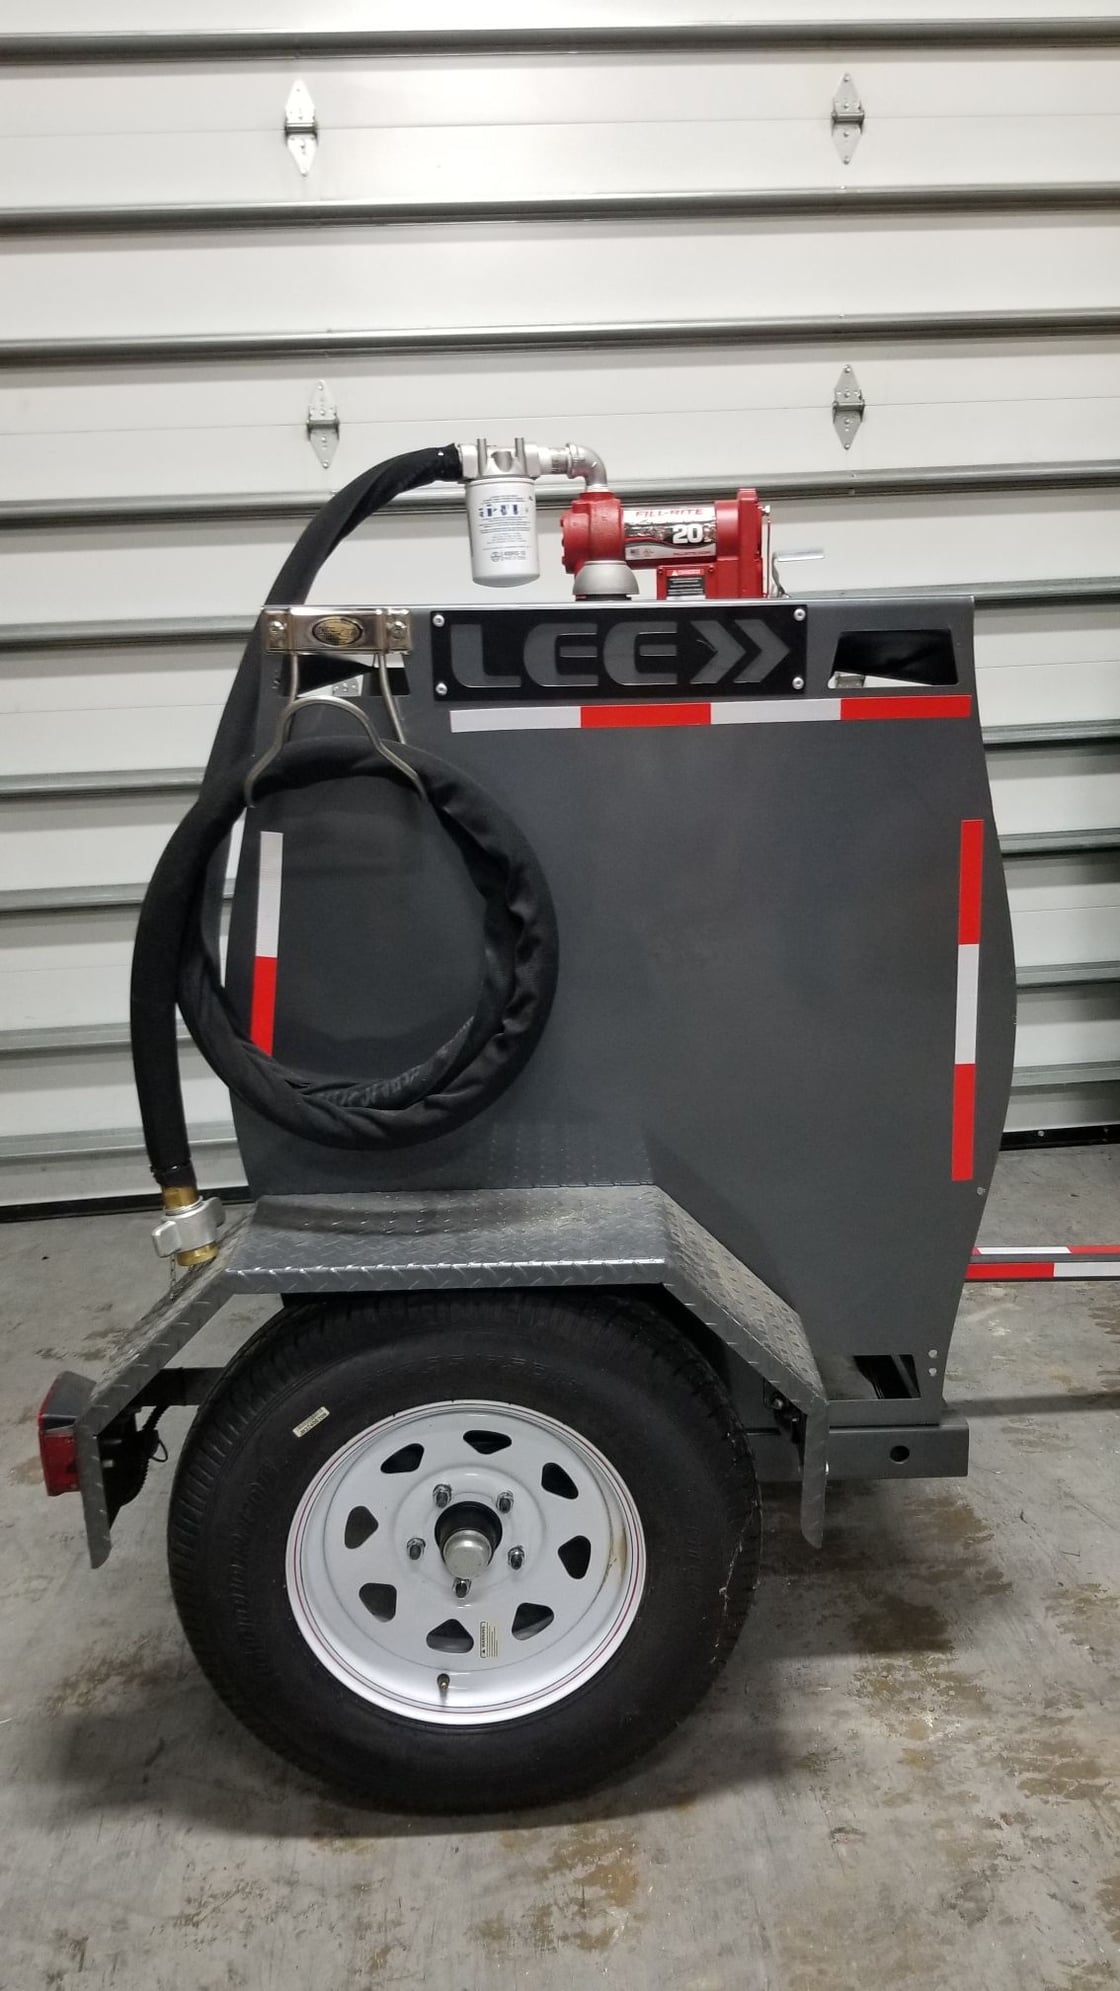 $500 off new fuel trailer LeeAgra dt200 - $7,000 (Destin) - The